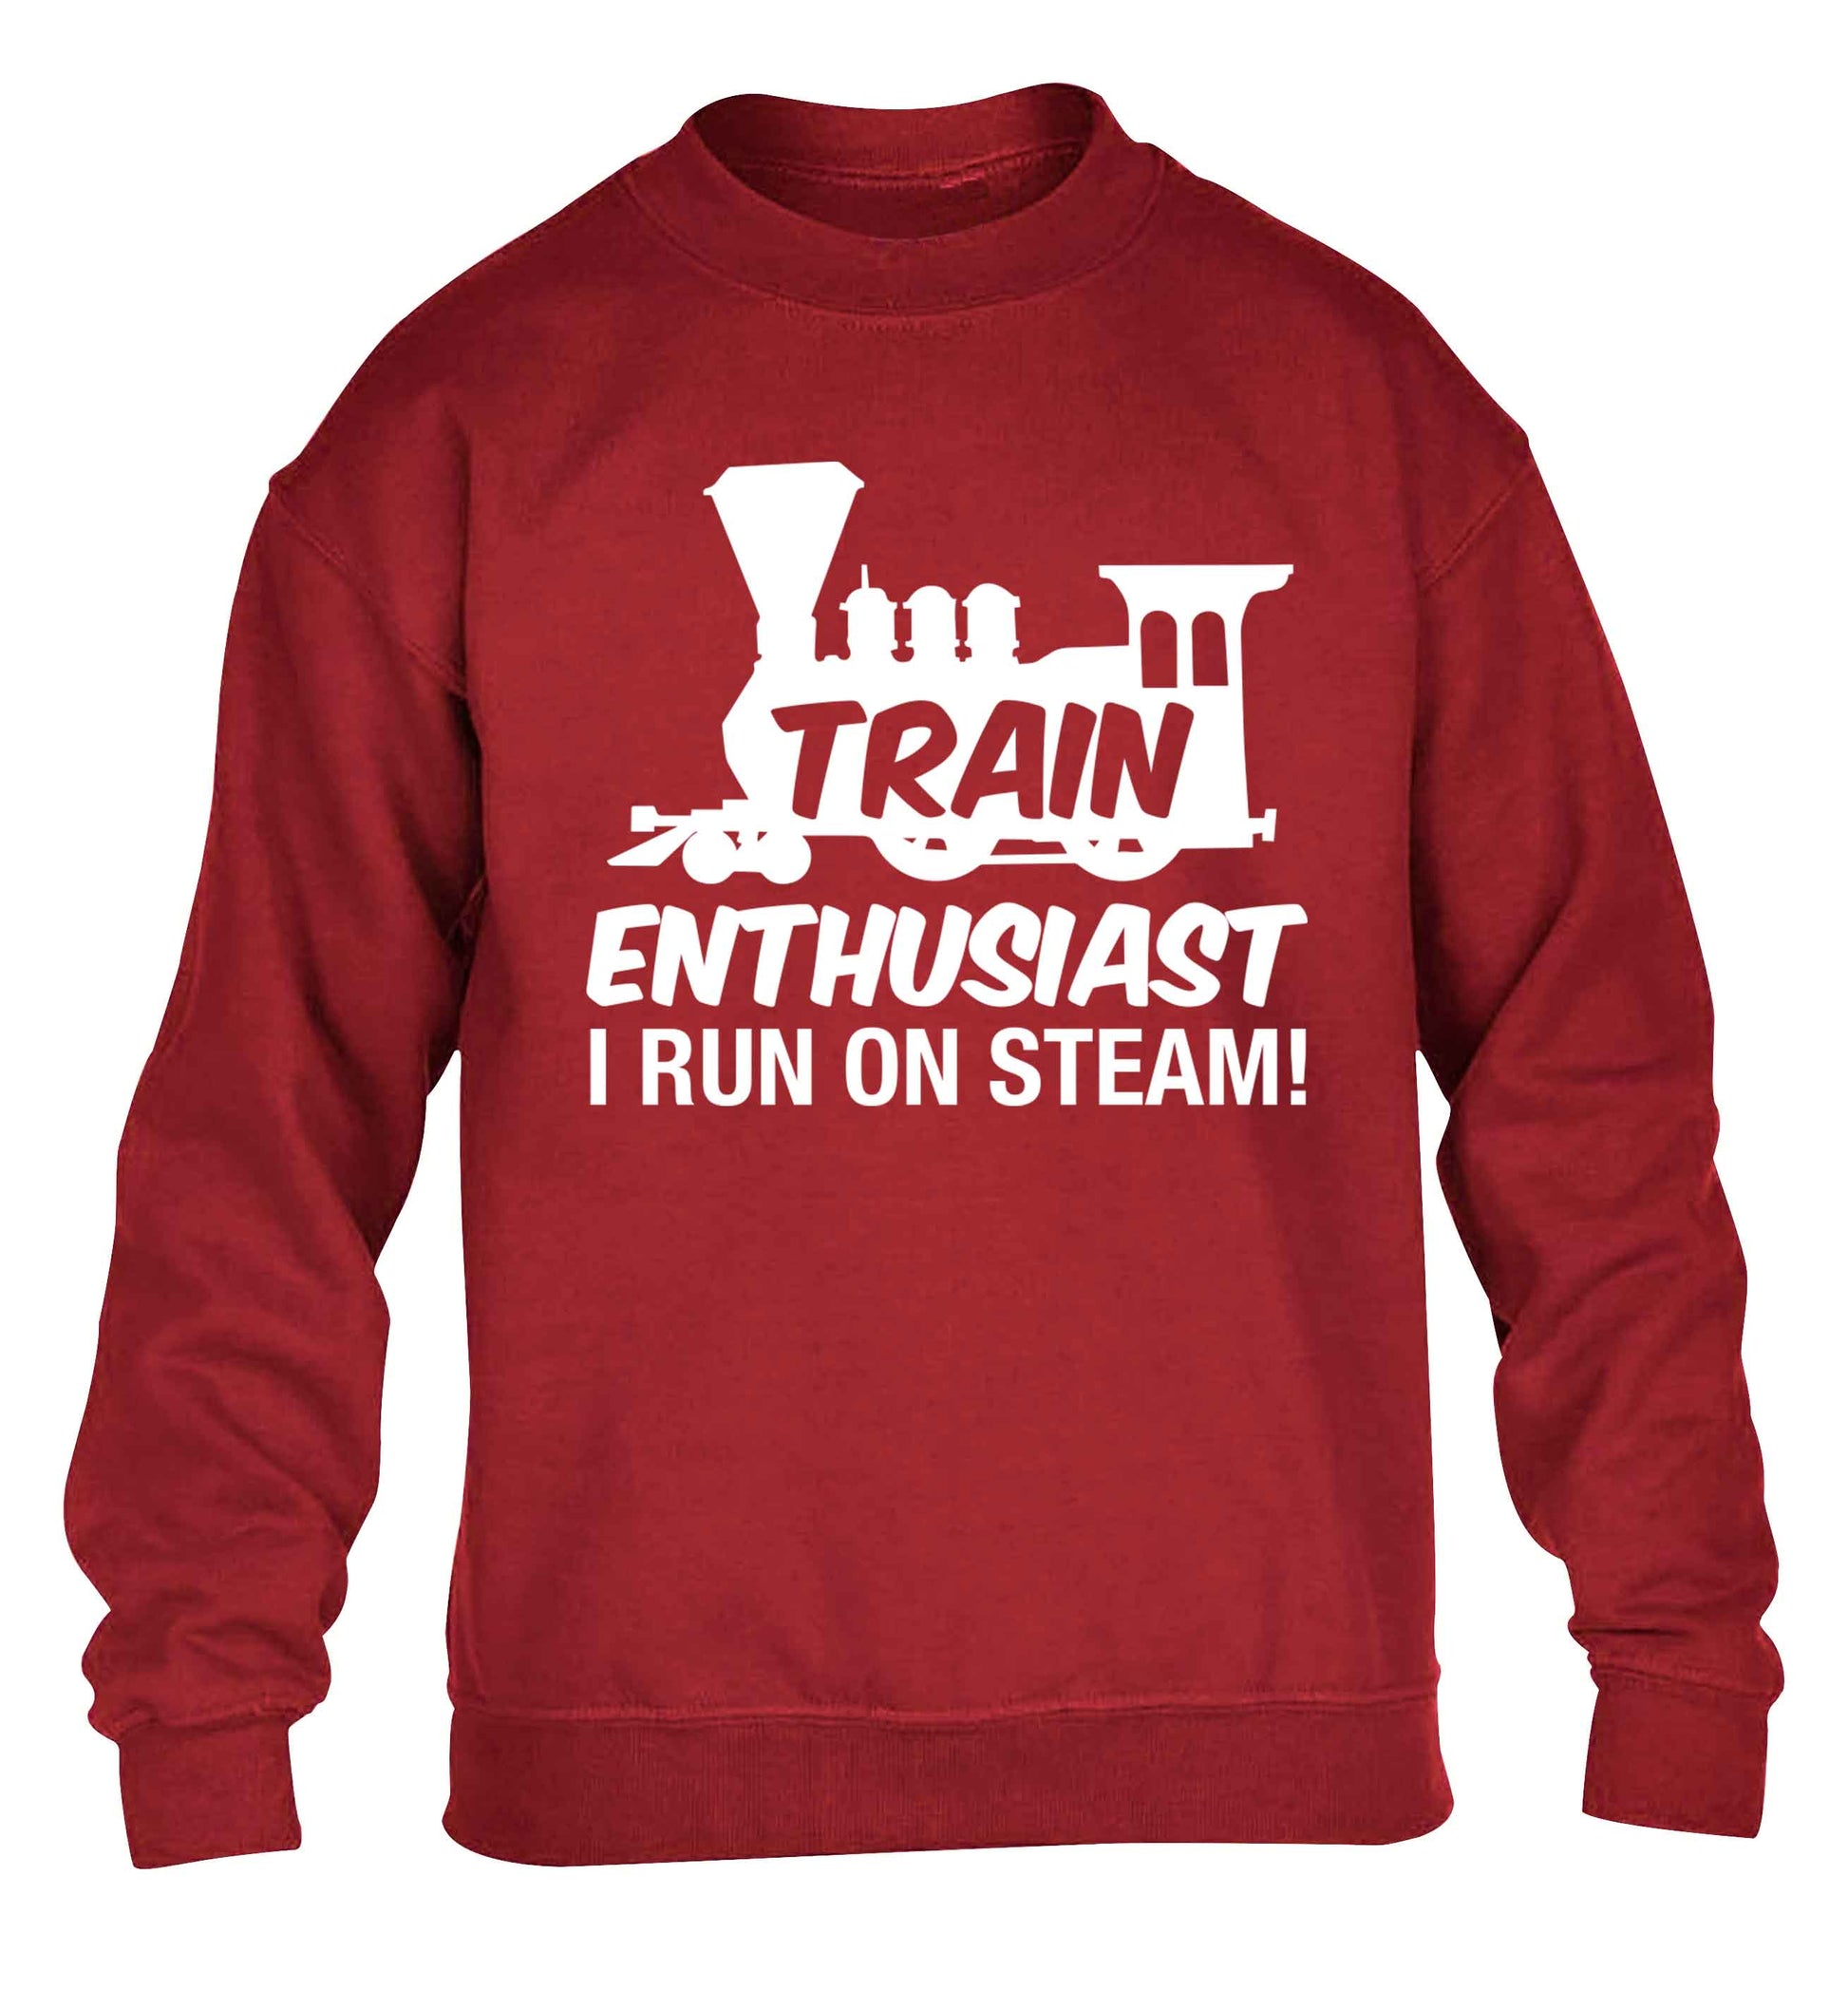 Train enthusiast I run on steam children's grey sweater 12-13 Years